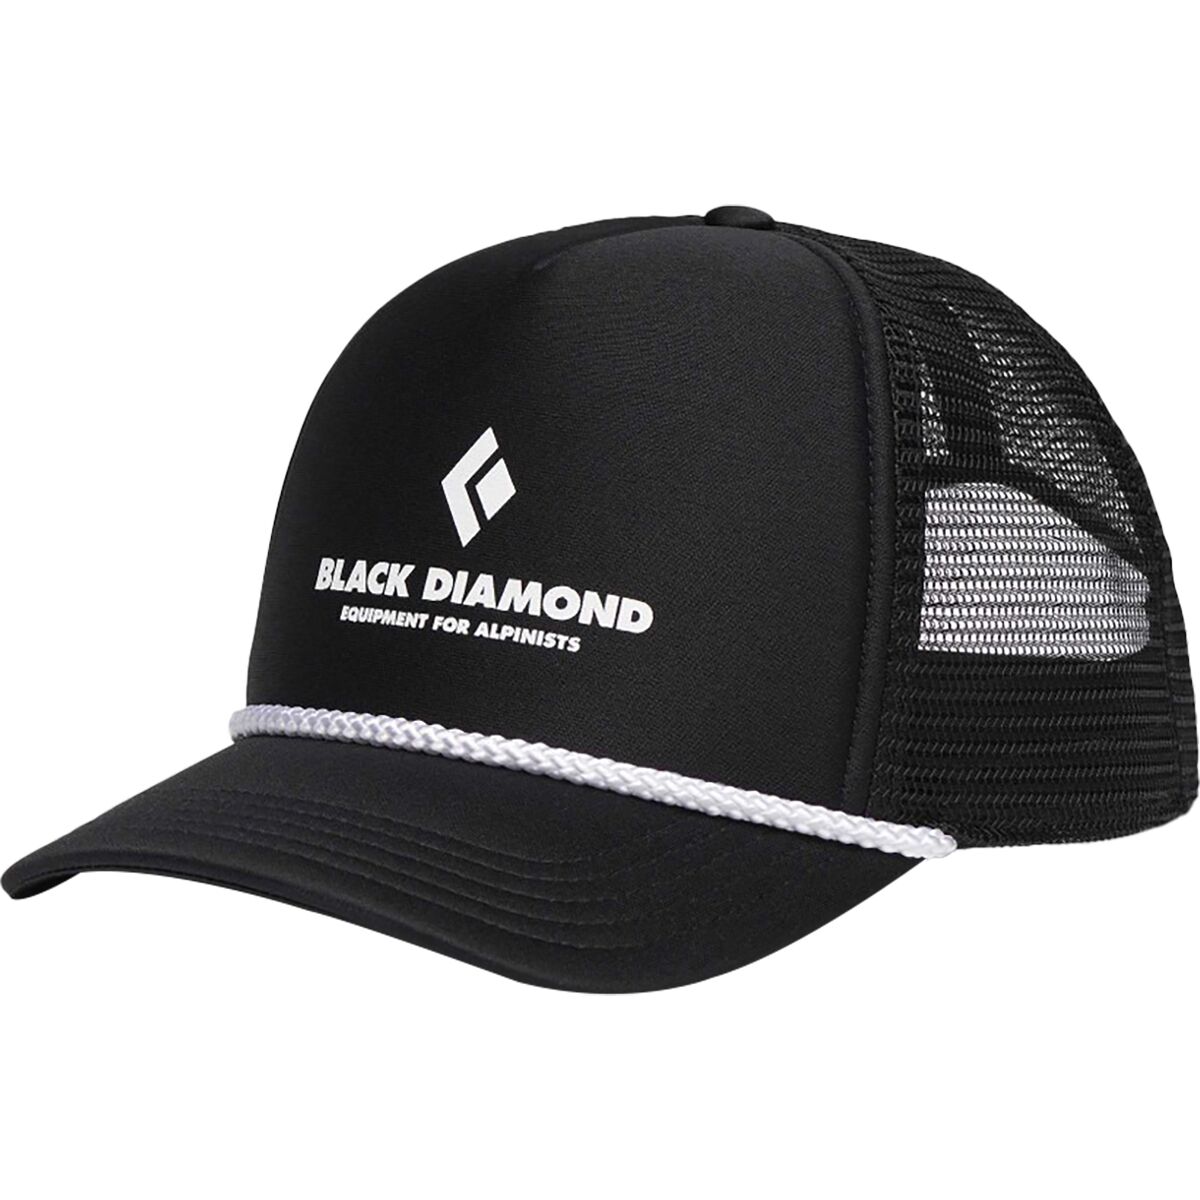 Кепка дальнобойщика с плоским козырьком Black Diamond, цвет black/black eqpmnt for alpnst fashion soft flag of baltimore heart hat gift dad hat trucker hat cowboy hat